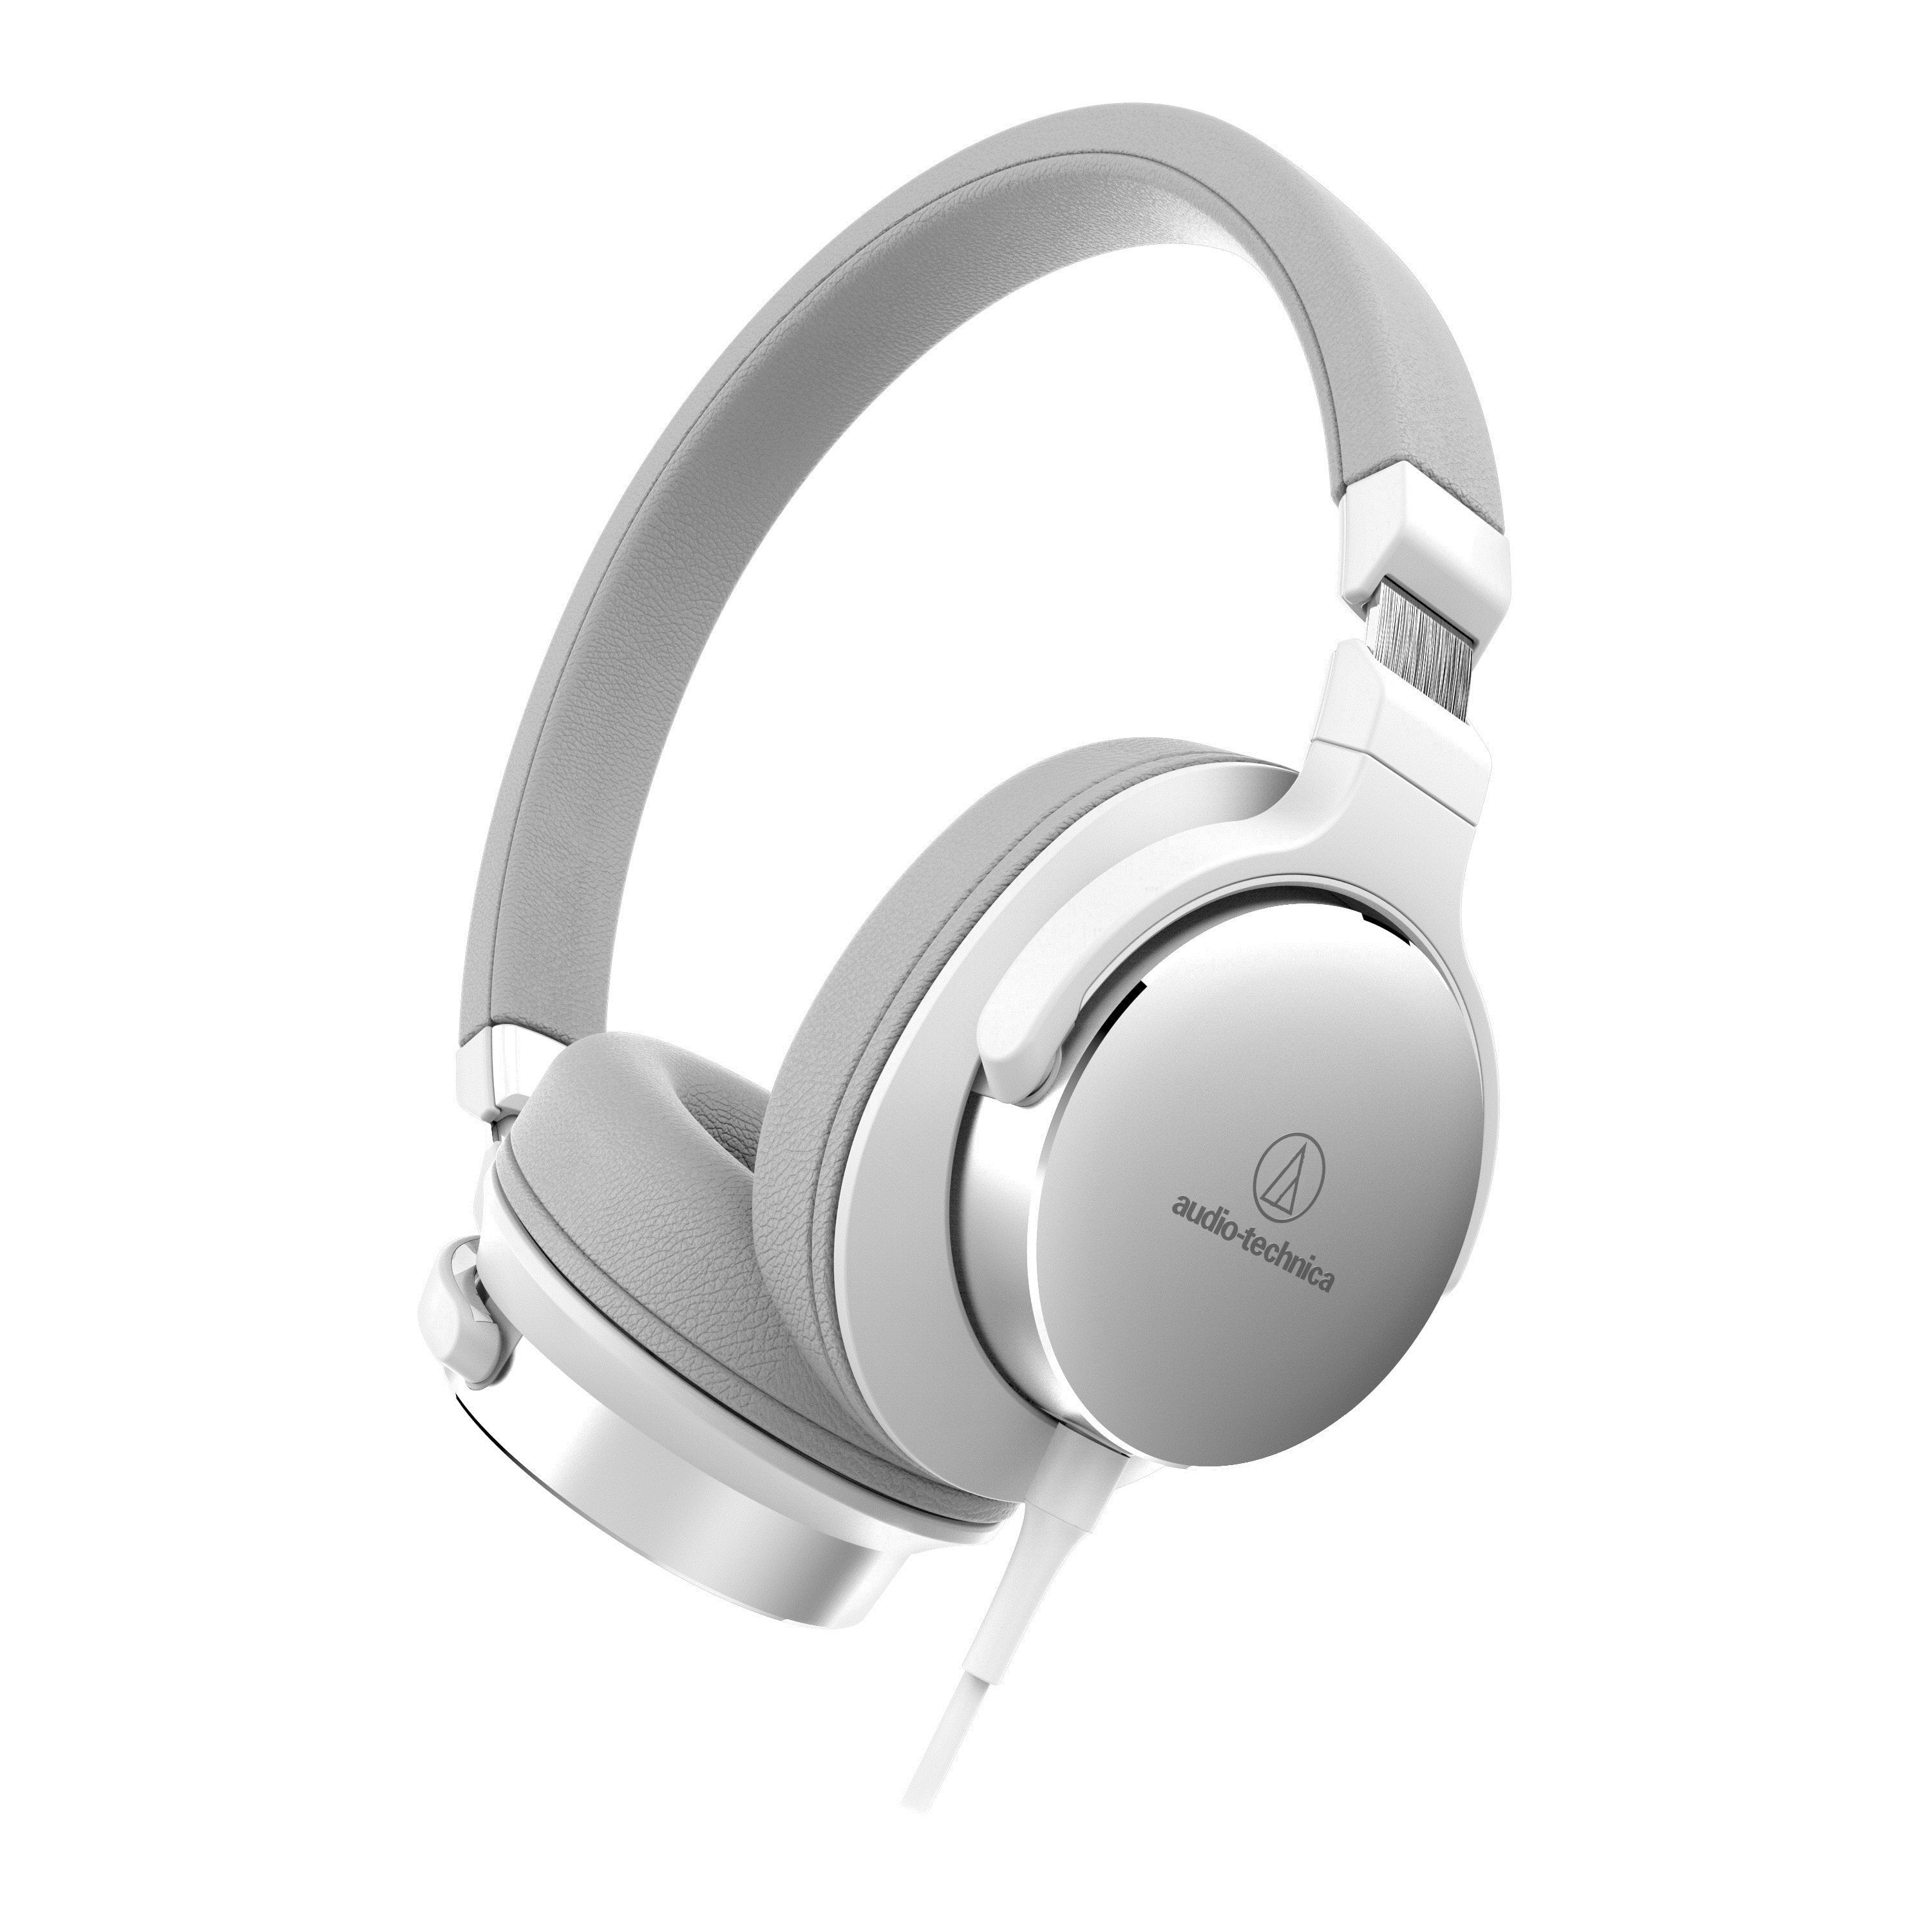 Audio Technica ATH-SR5 On-Ear High-Resolution Audio Headphones